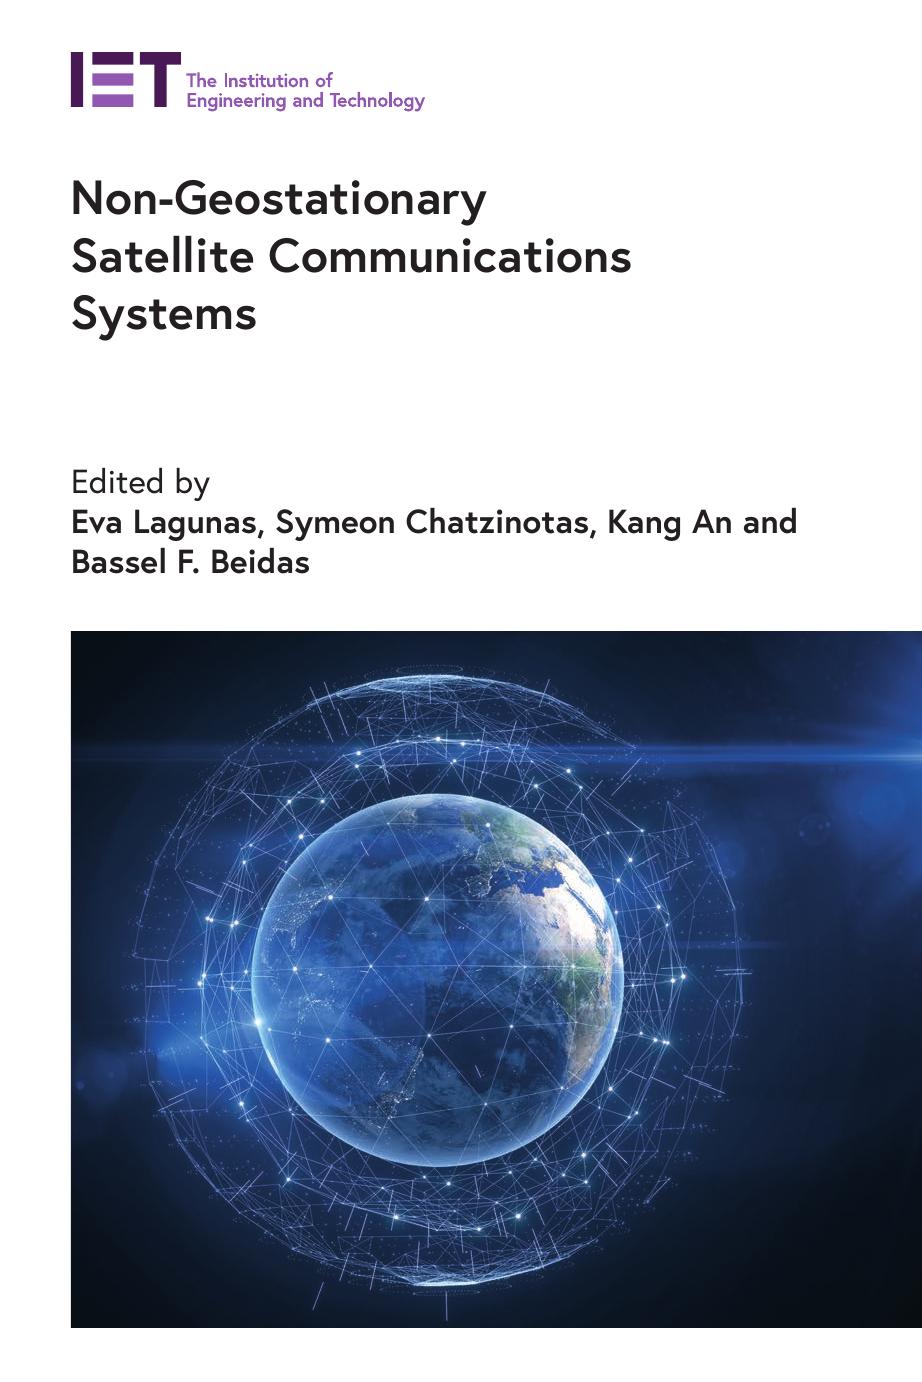 Non-Geostationary Satellite Communications Systems by Eva Lagunas Symeon Chatzinotas Kang An Bassel F. Beidas